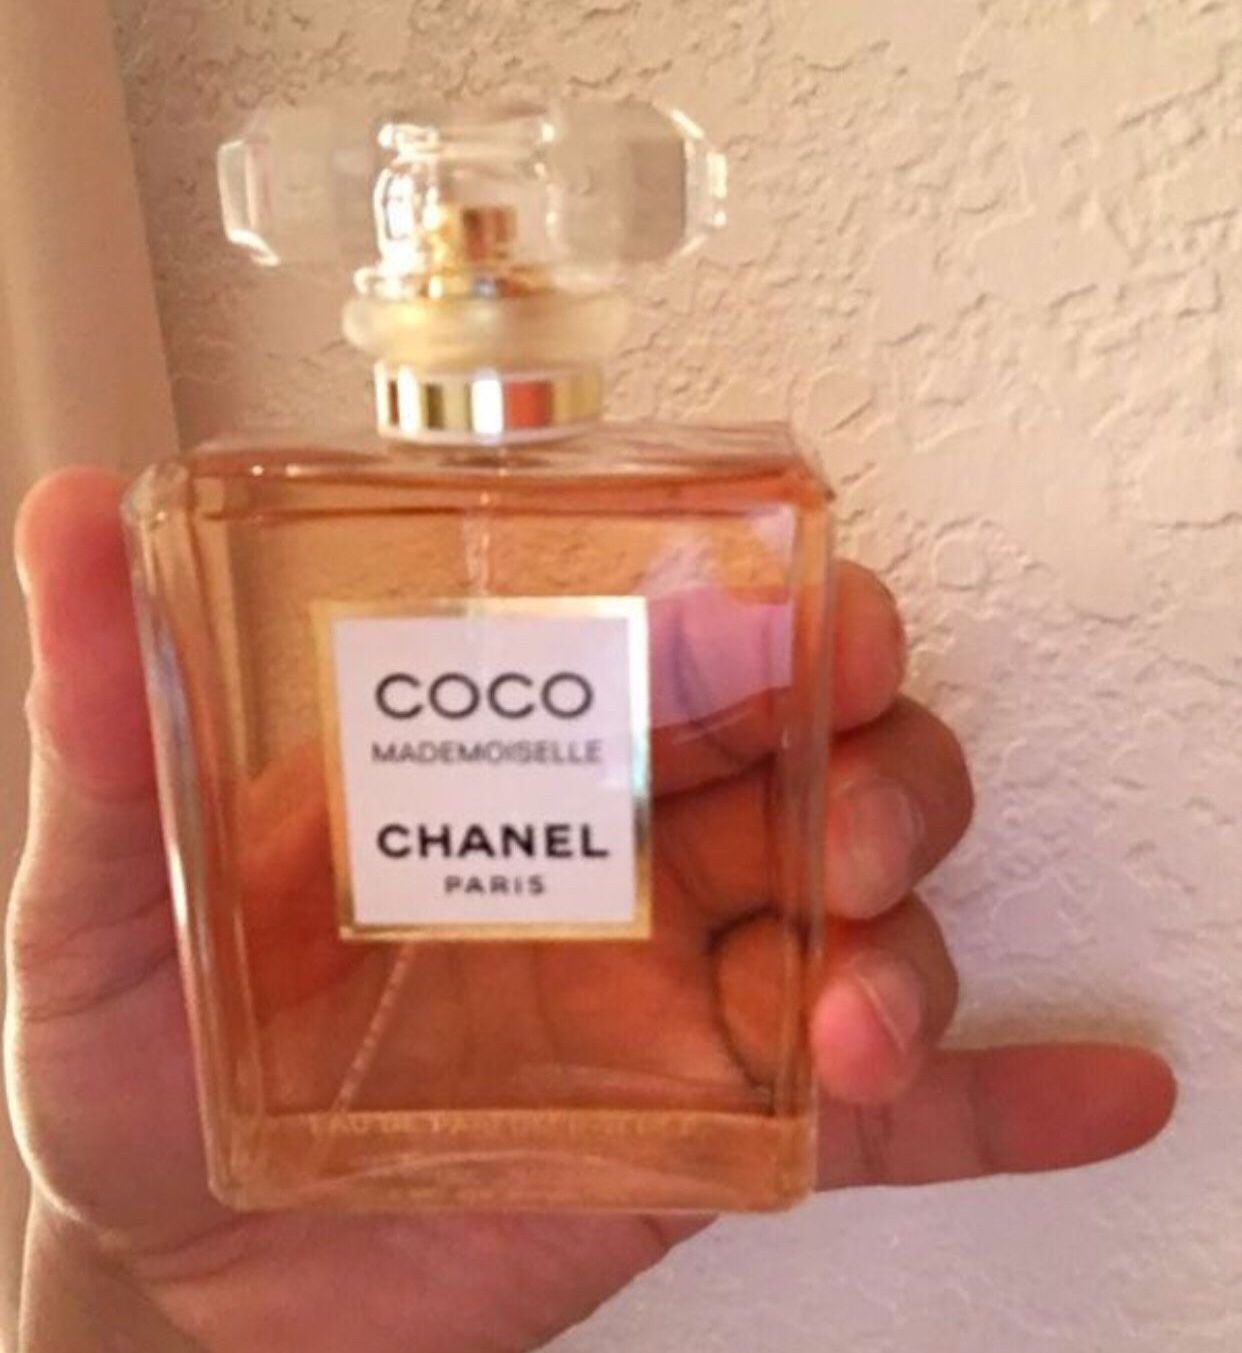 Coco Chanel mademoiselle perfume 3.4oz